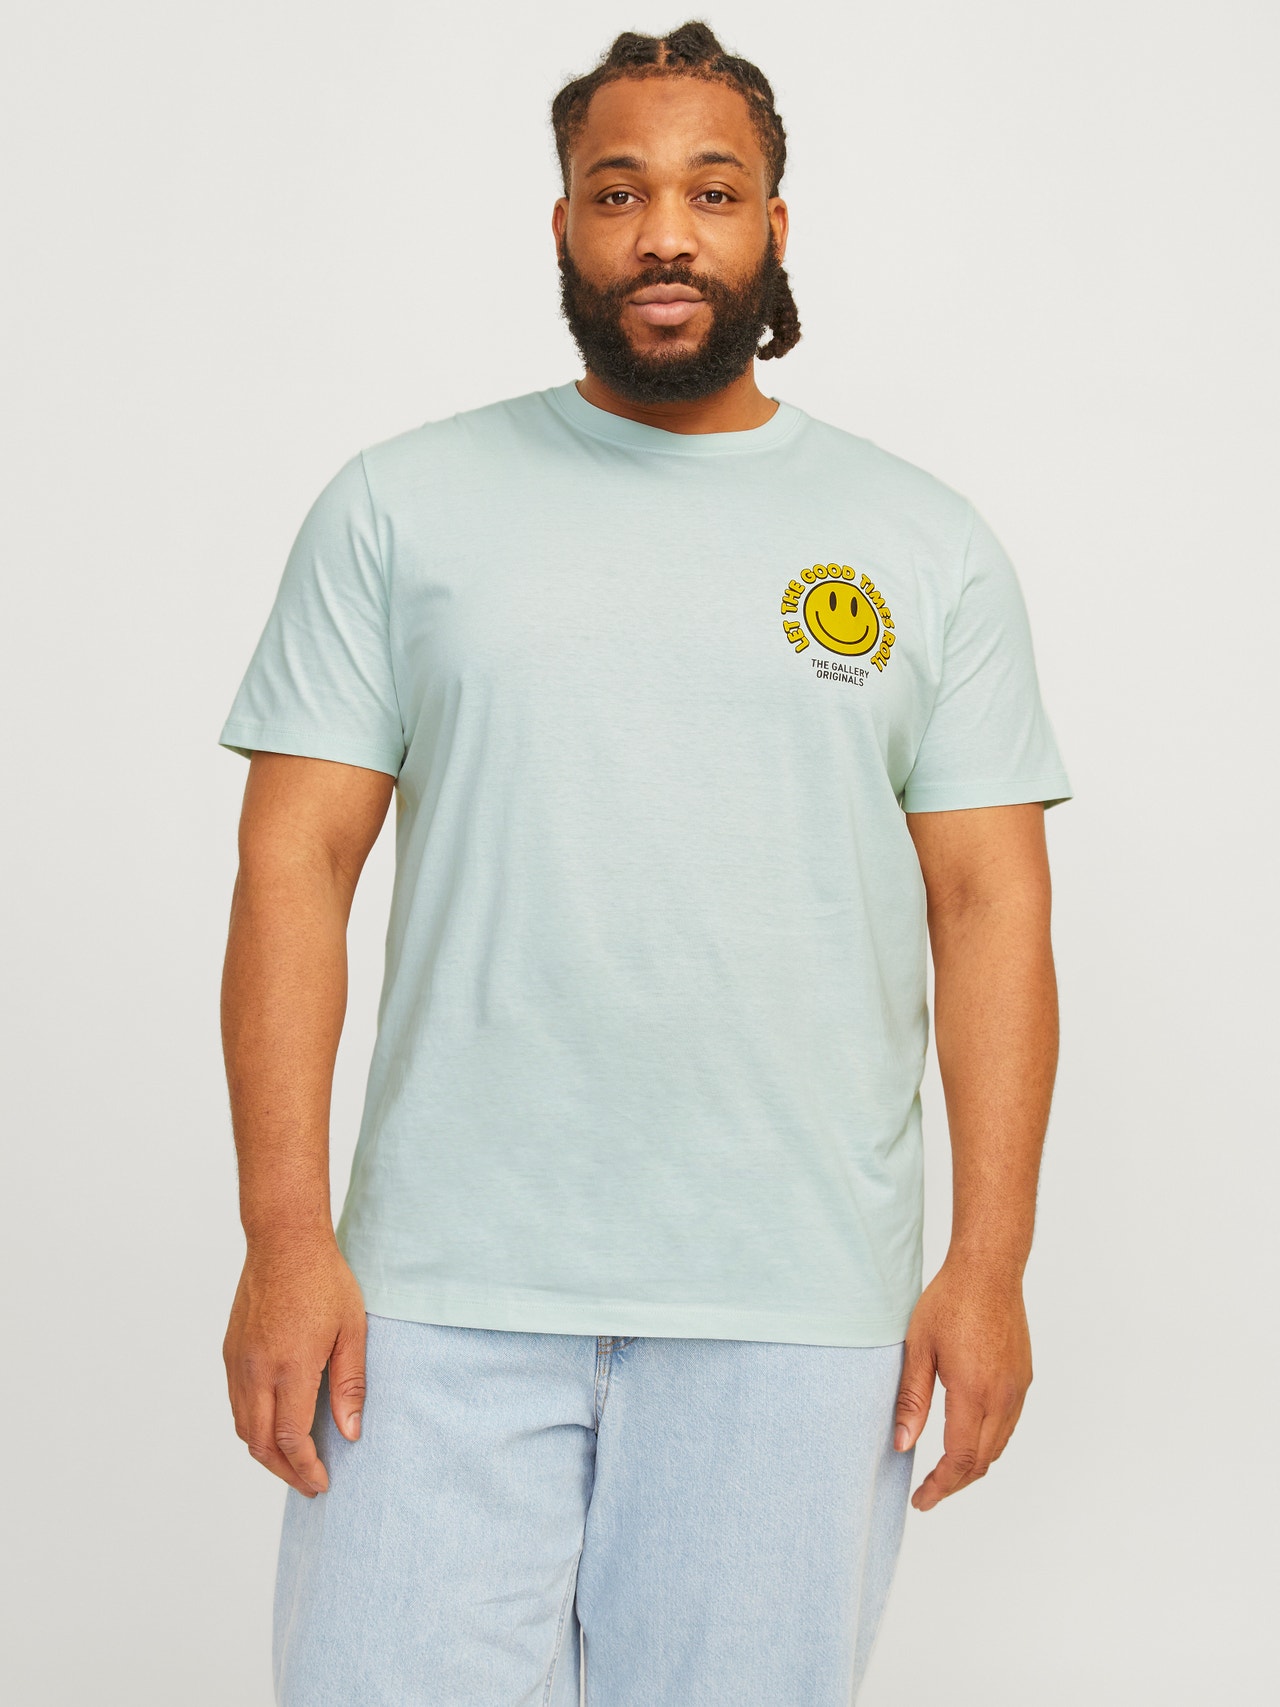 Jack & Jones Plus Size Gedrukt T-shirt -Skylight - 12261568